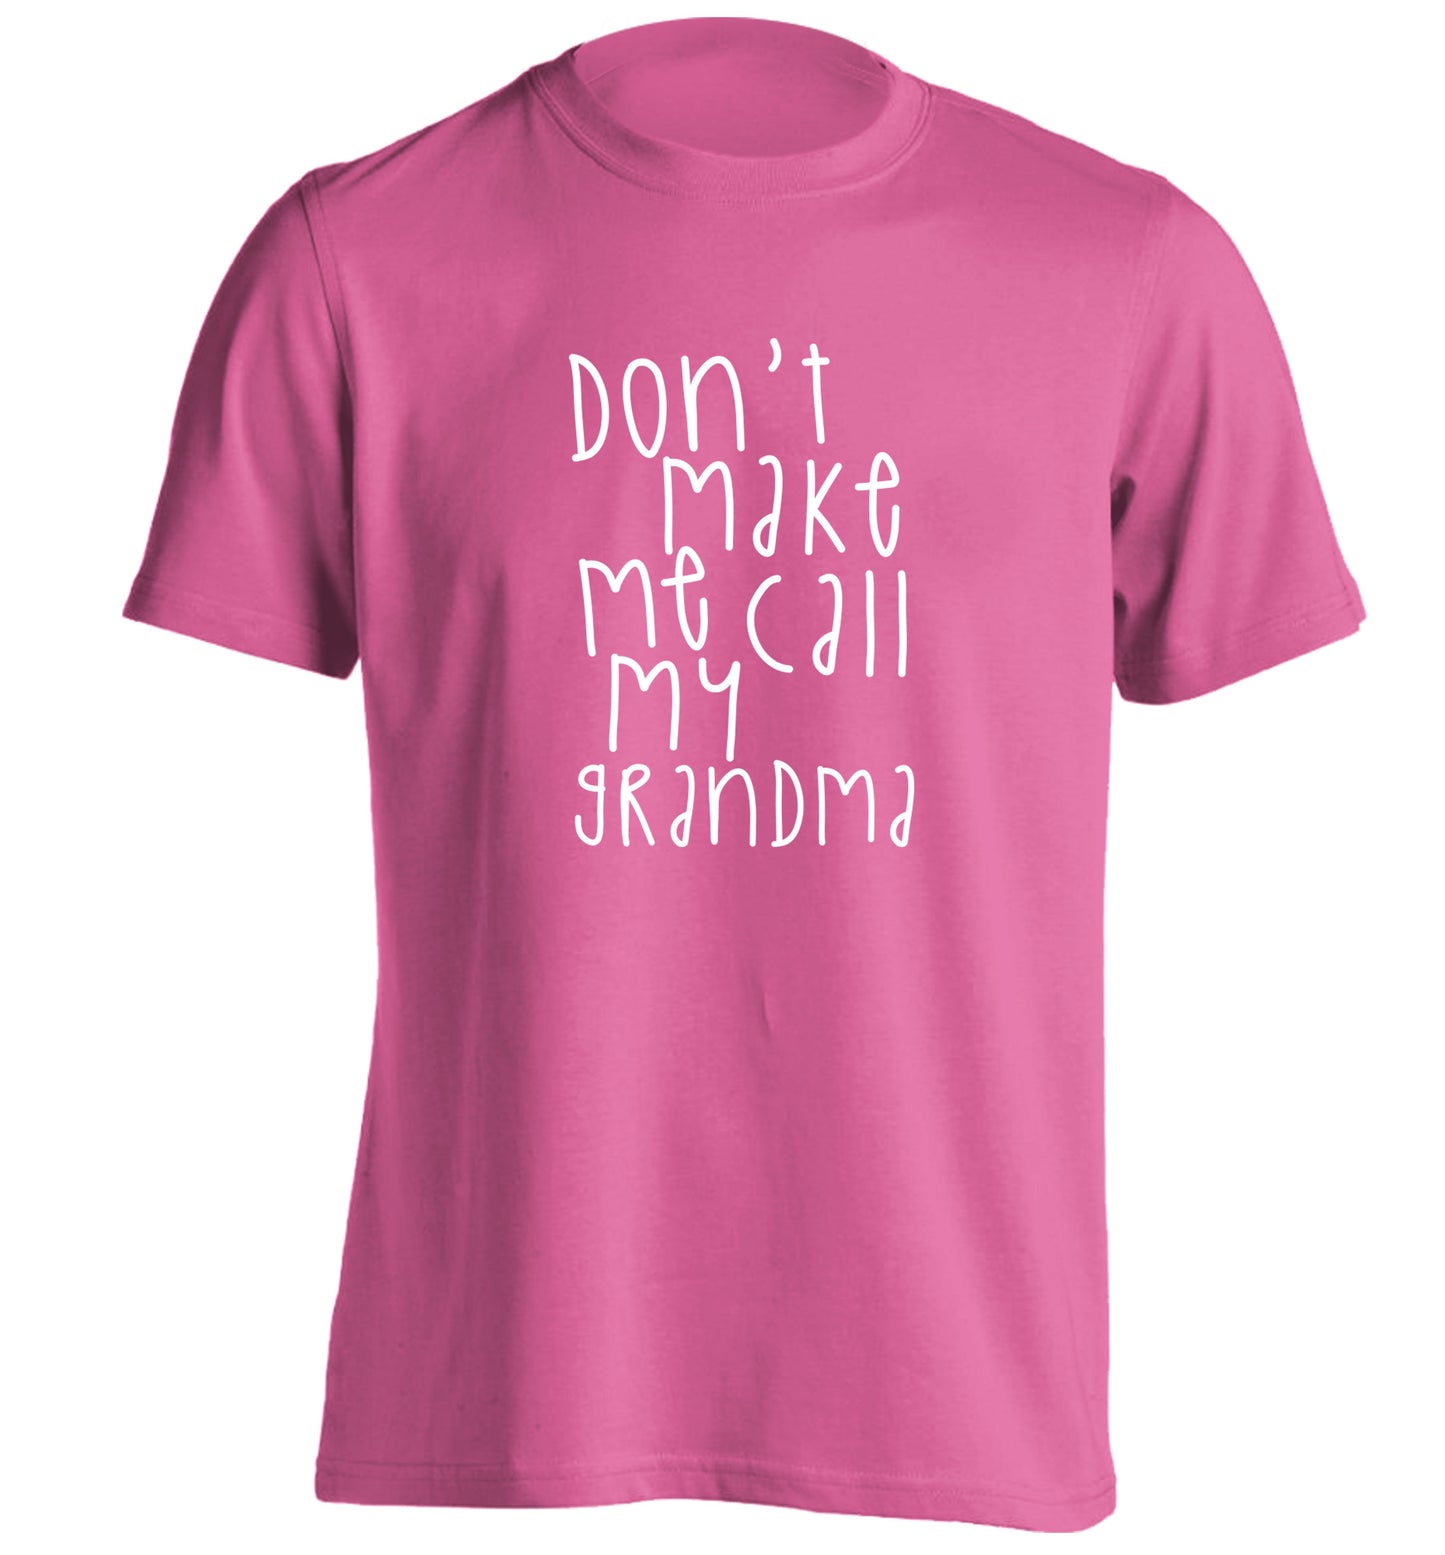 Don't make me call my grandma adults unisex pink Tshirt 2XL